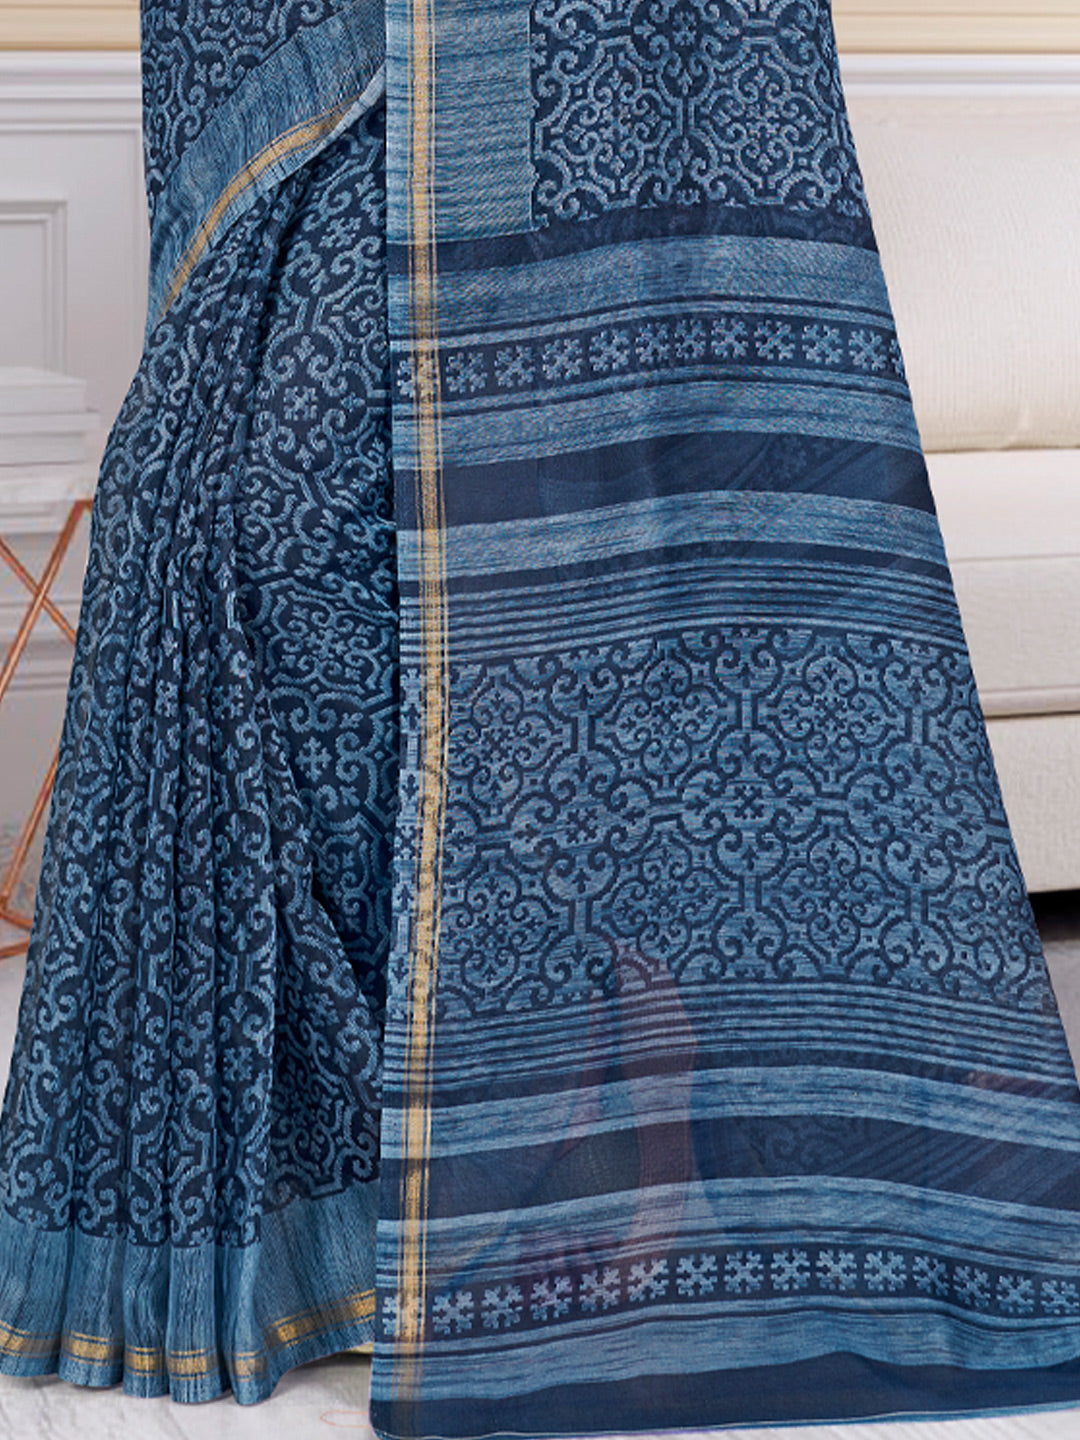 Women's Blue Cotton Printed Traditional Saree - Sangam Prints